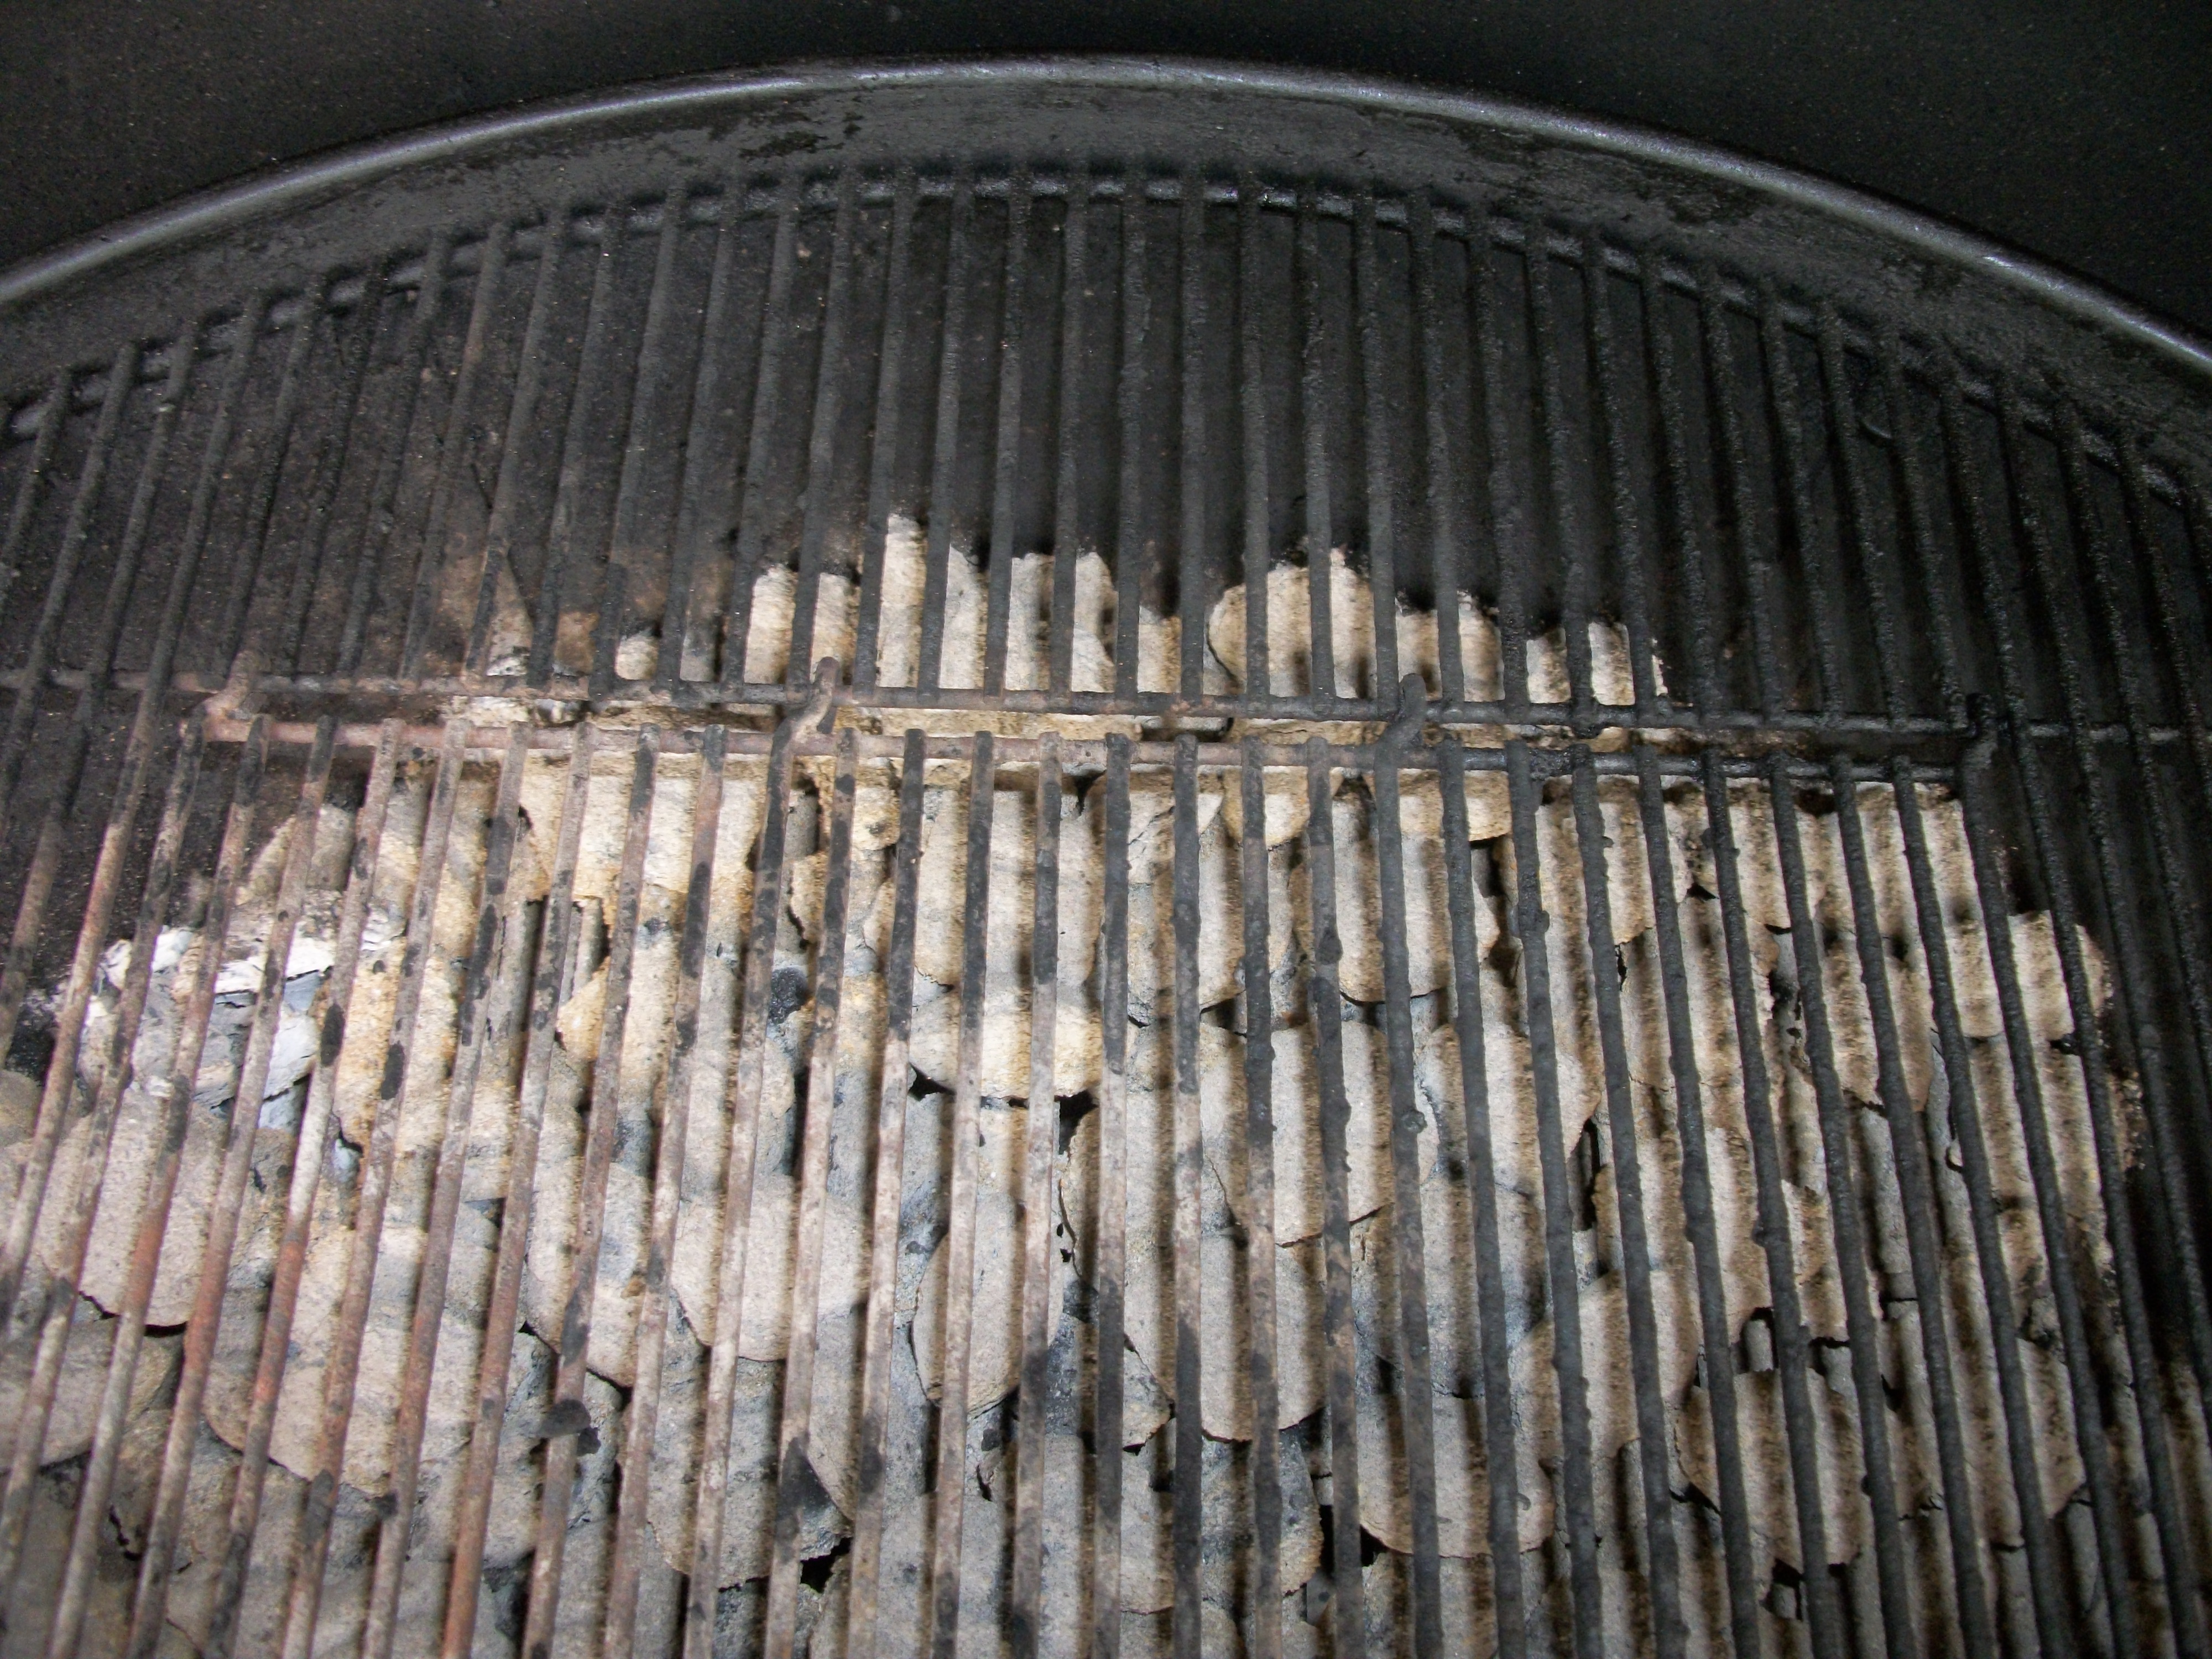 Coals in a grill photo